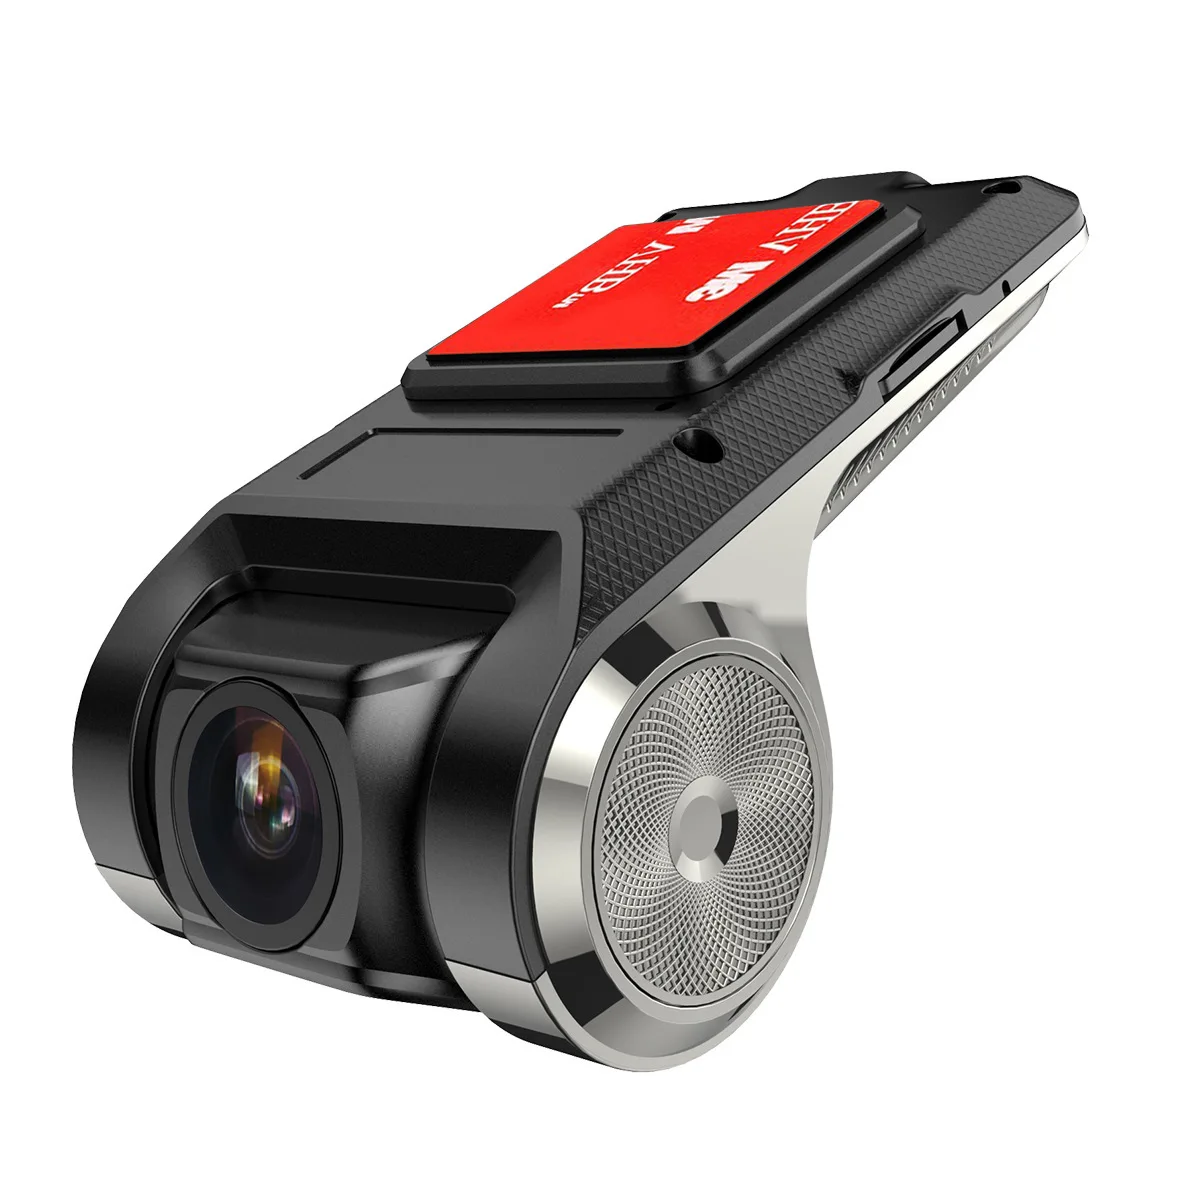 ZOYOSKII car Dash Cam USB DVR Camera Video recorder Full HD ADAS Lane Departure Warning System Motion De 16G TF card